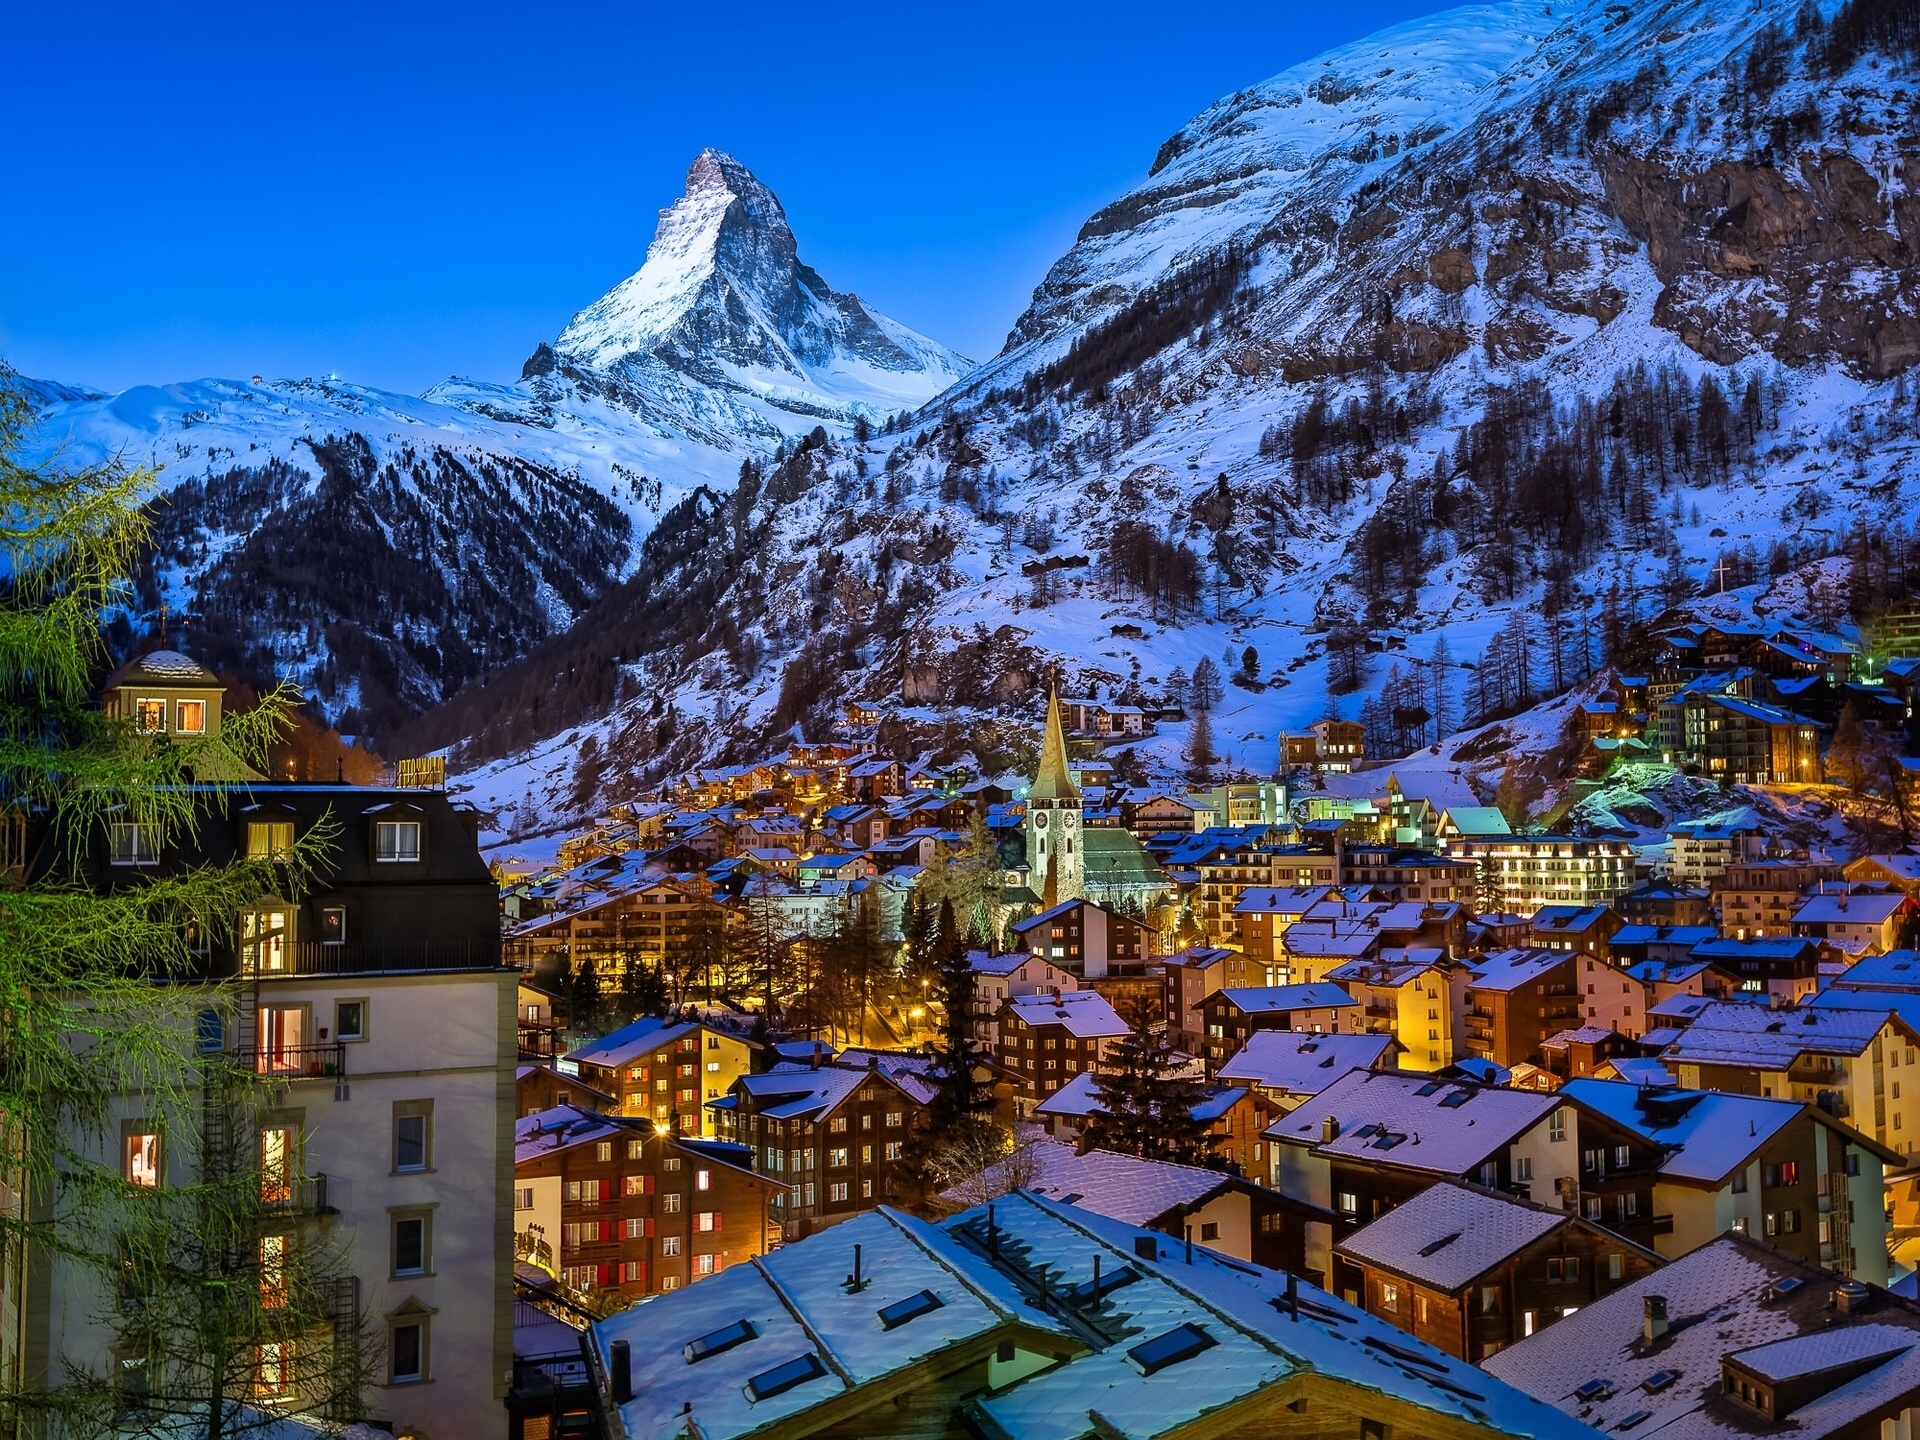 Man Made Village Matterhorn Switzerland Alps Winter Snow 1920x1440